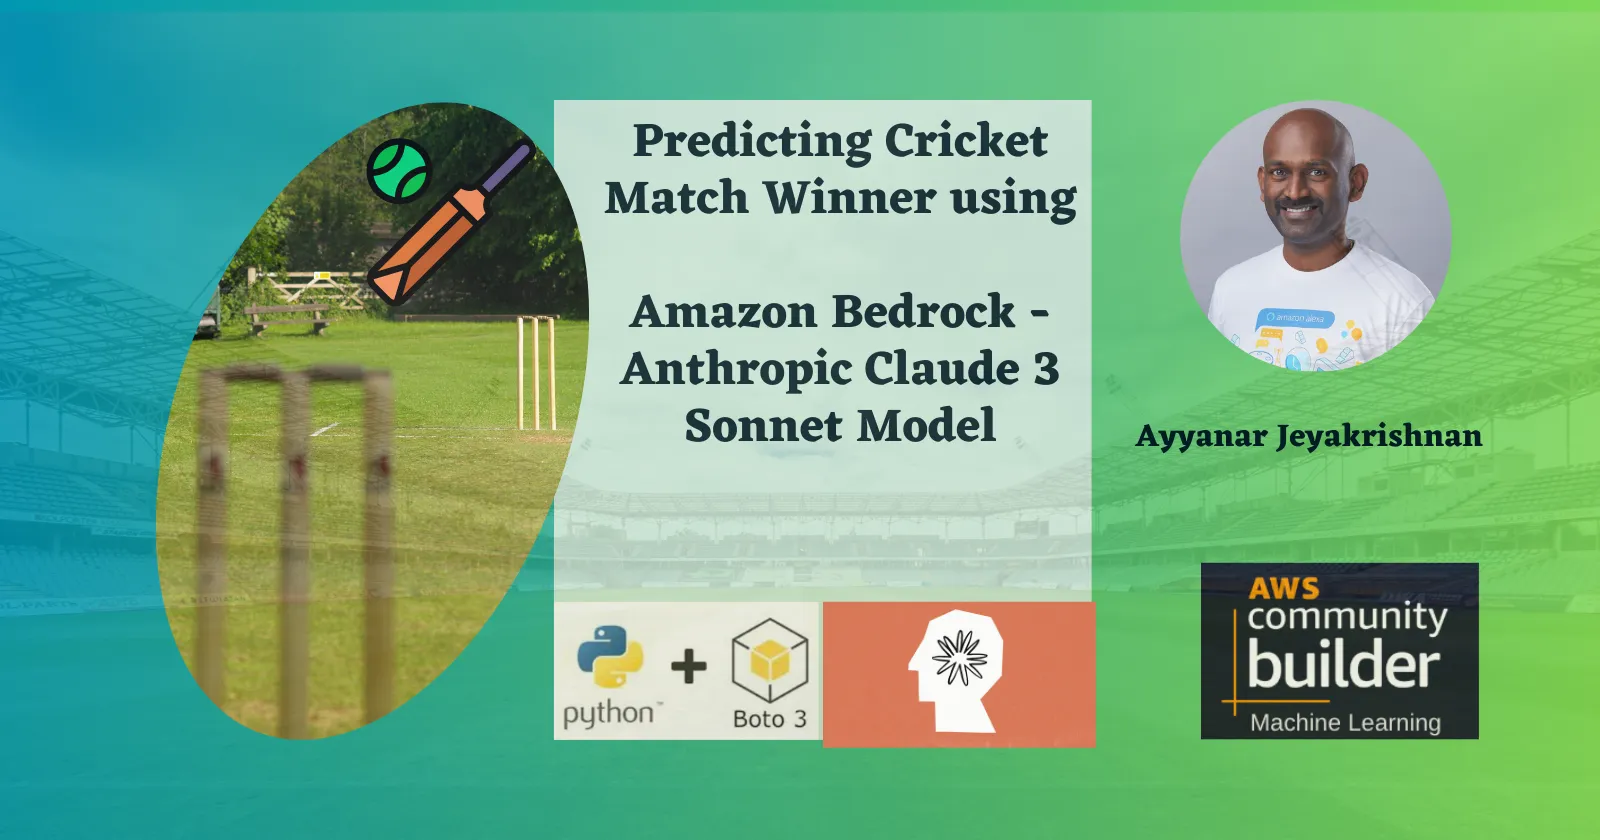 Cricket Match Winner Prediction with Amazon Bedrock's Anthropic Claude 3 Sonnet